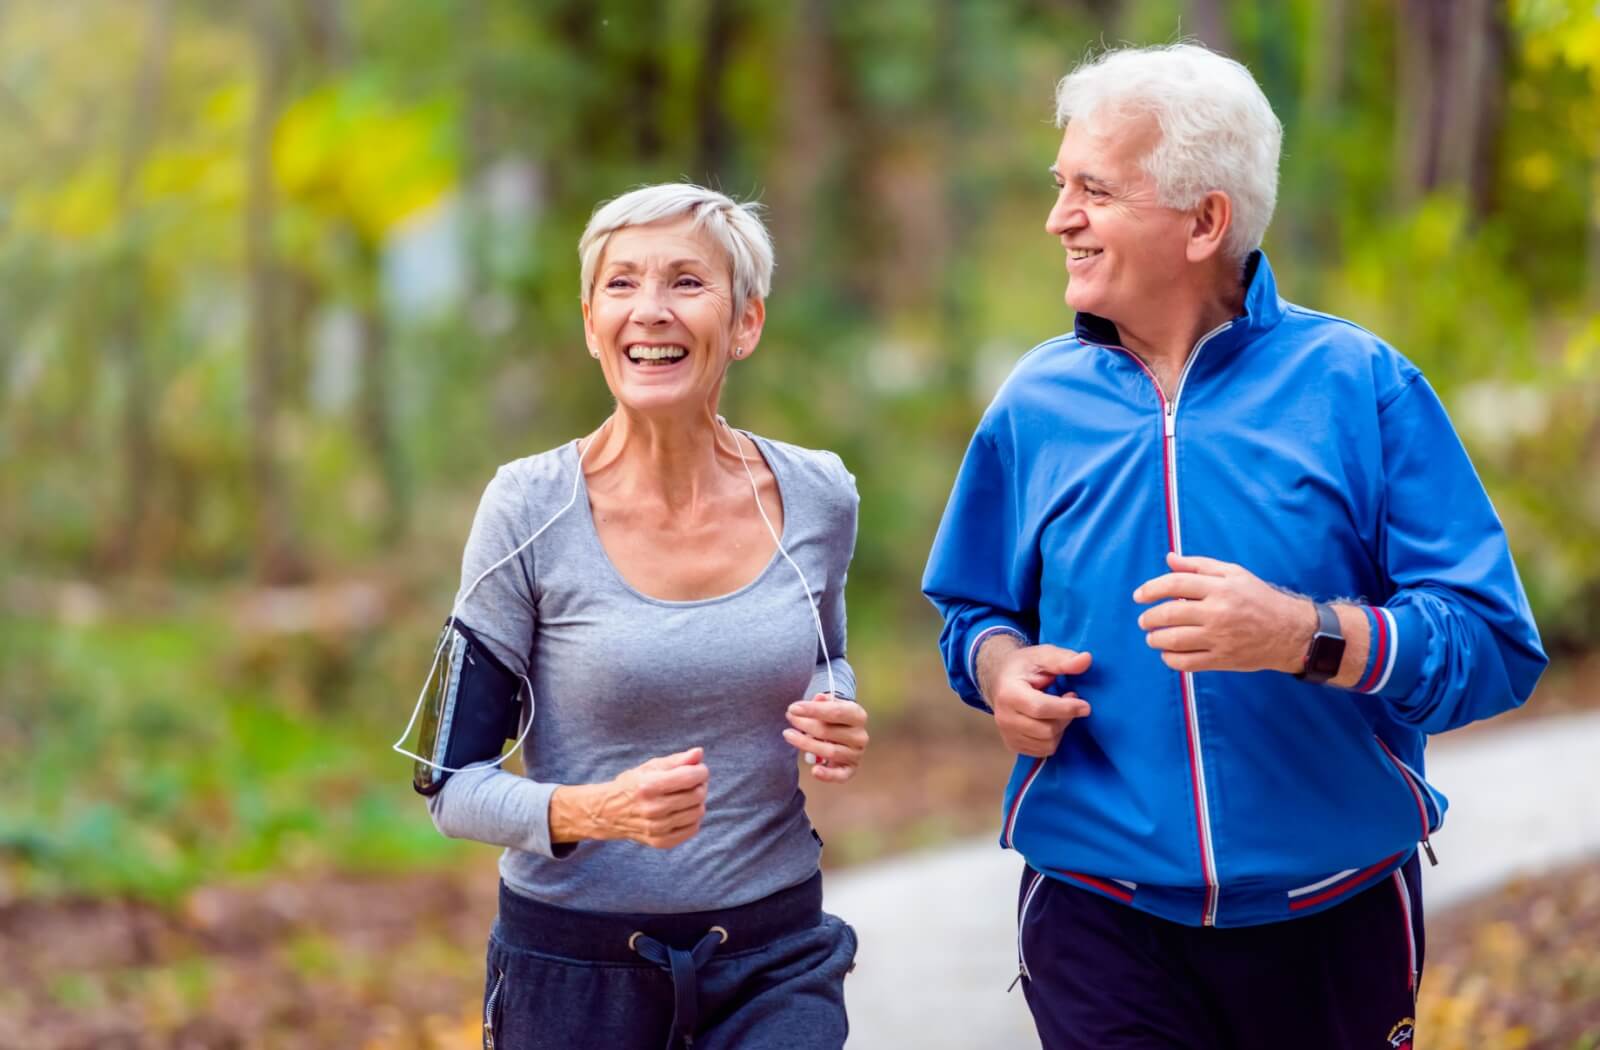 A happy senior couple on their morning jog.